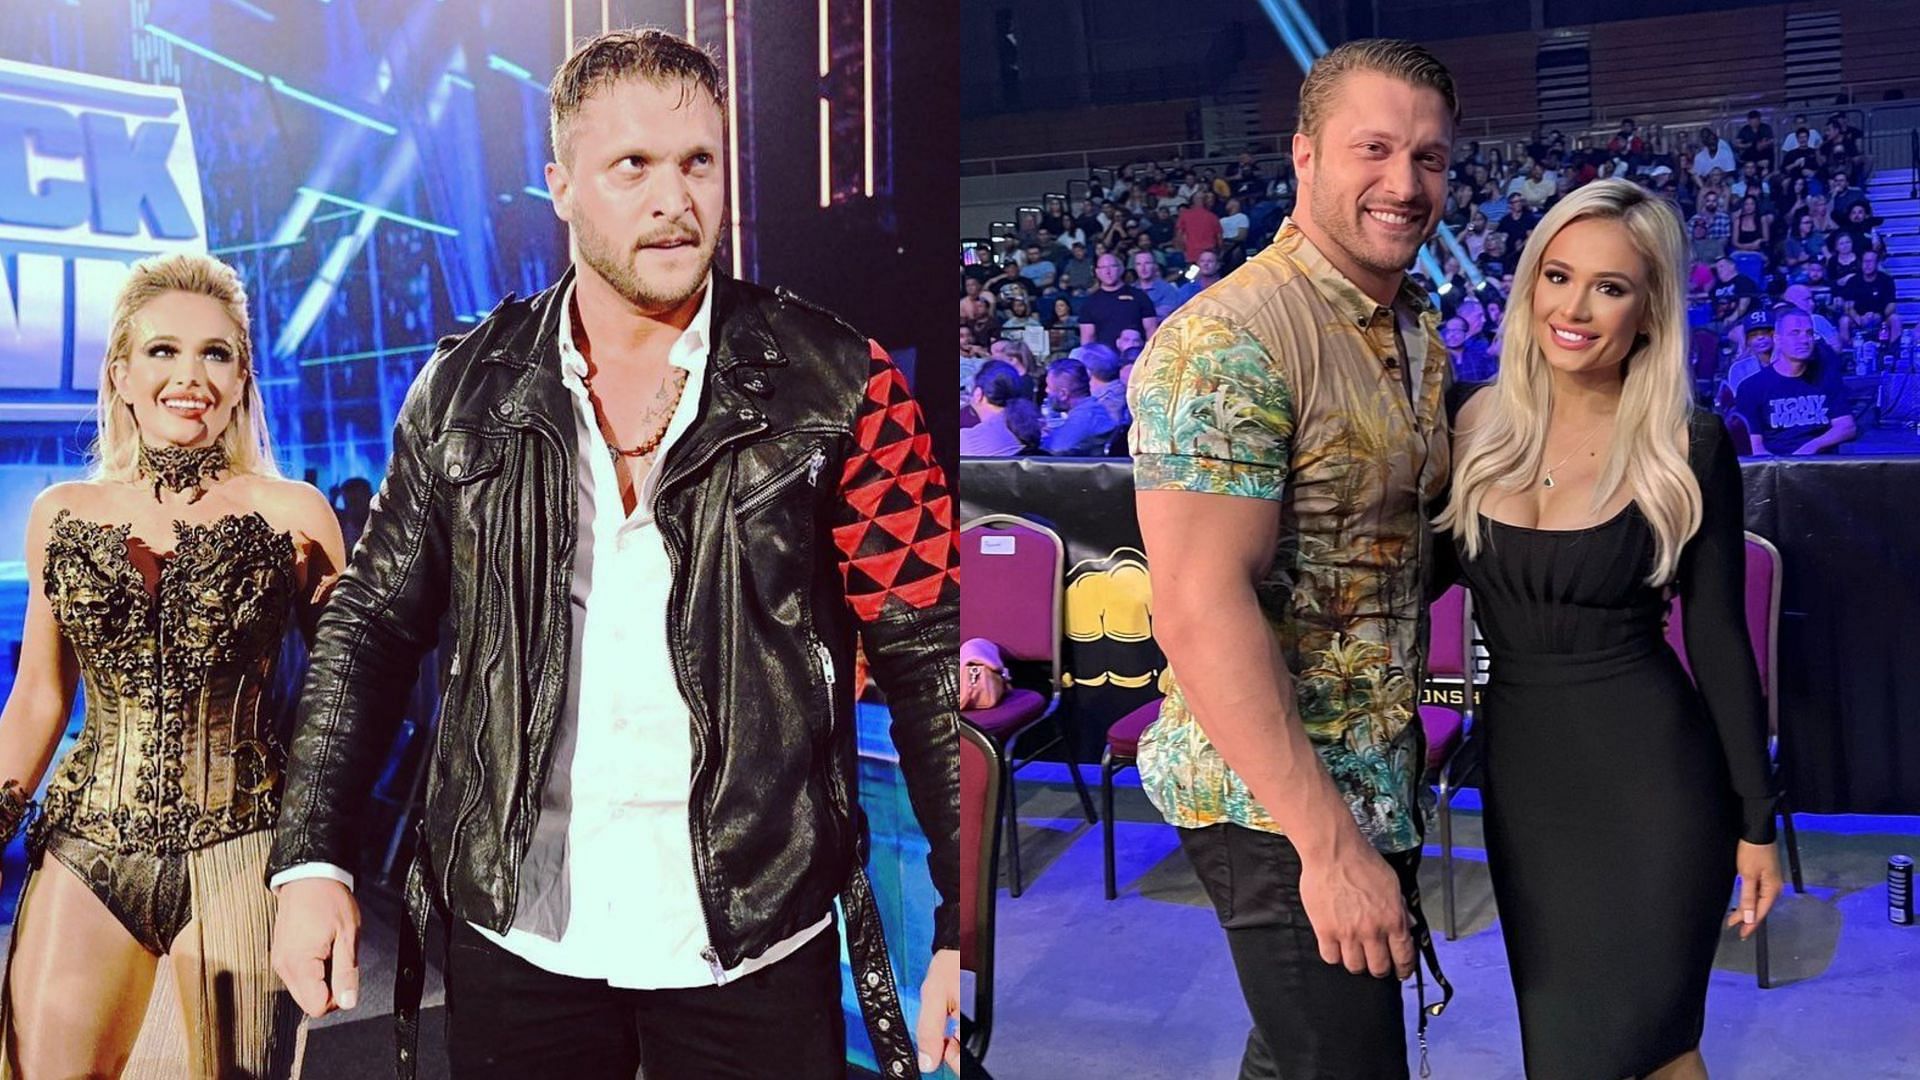 Karrion Kross and Scarlett Bordeaux recently returned to WWE